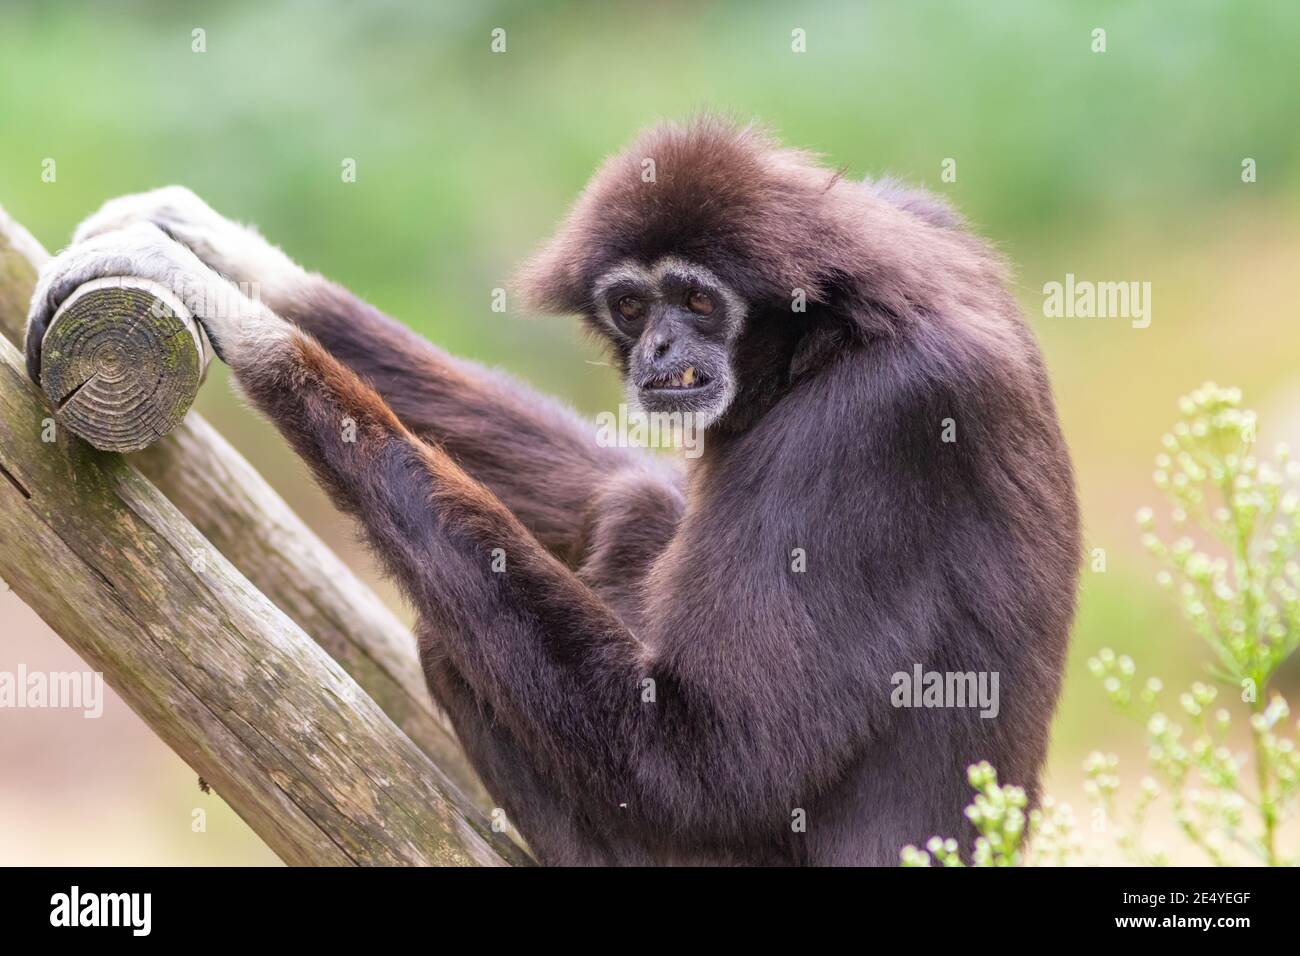 Lar gibbon white handed gibbon ape monkey portrait close up Stock Photo